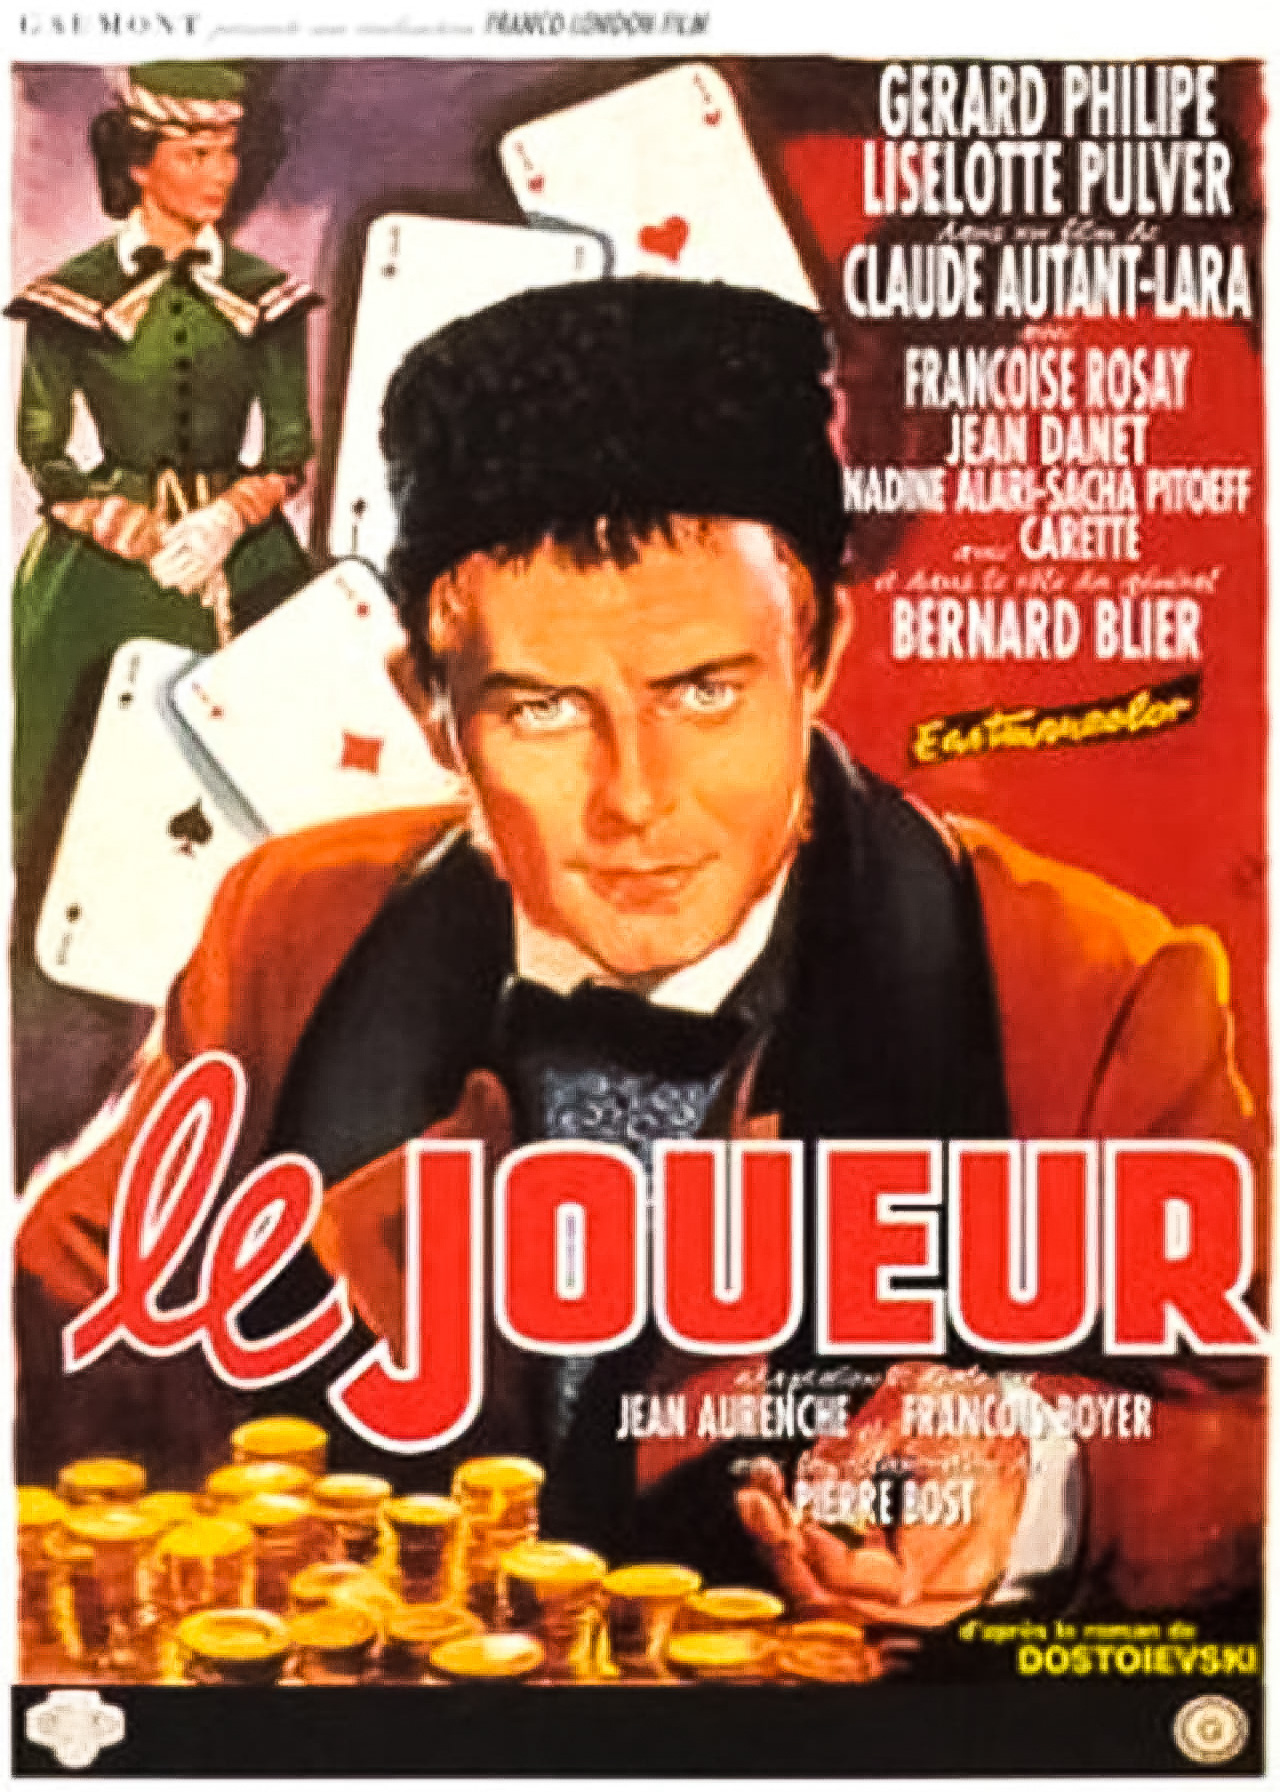 Le joueur (1958) Screenshot 4